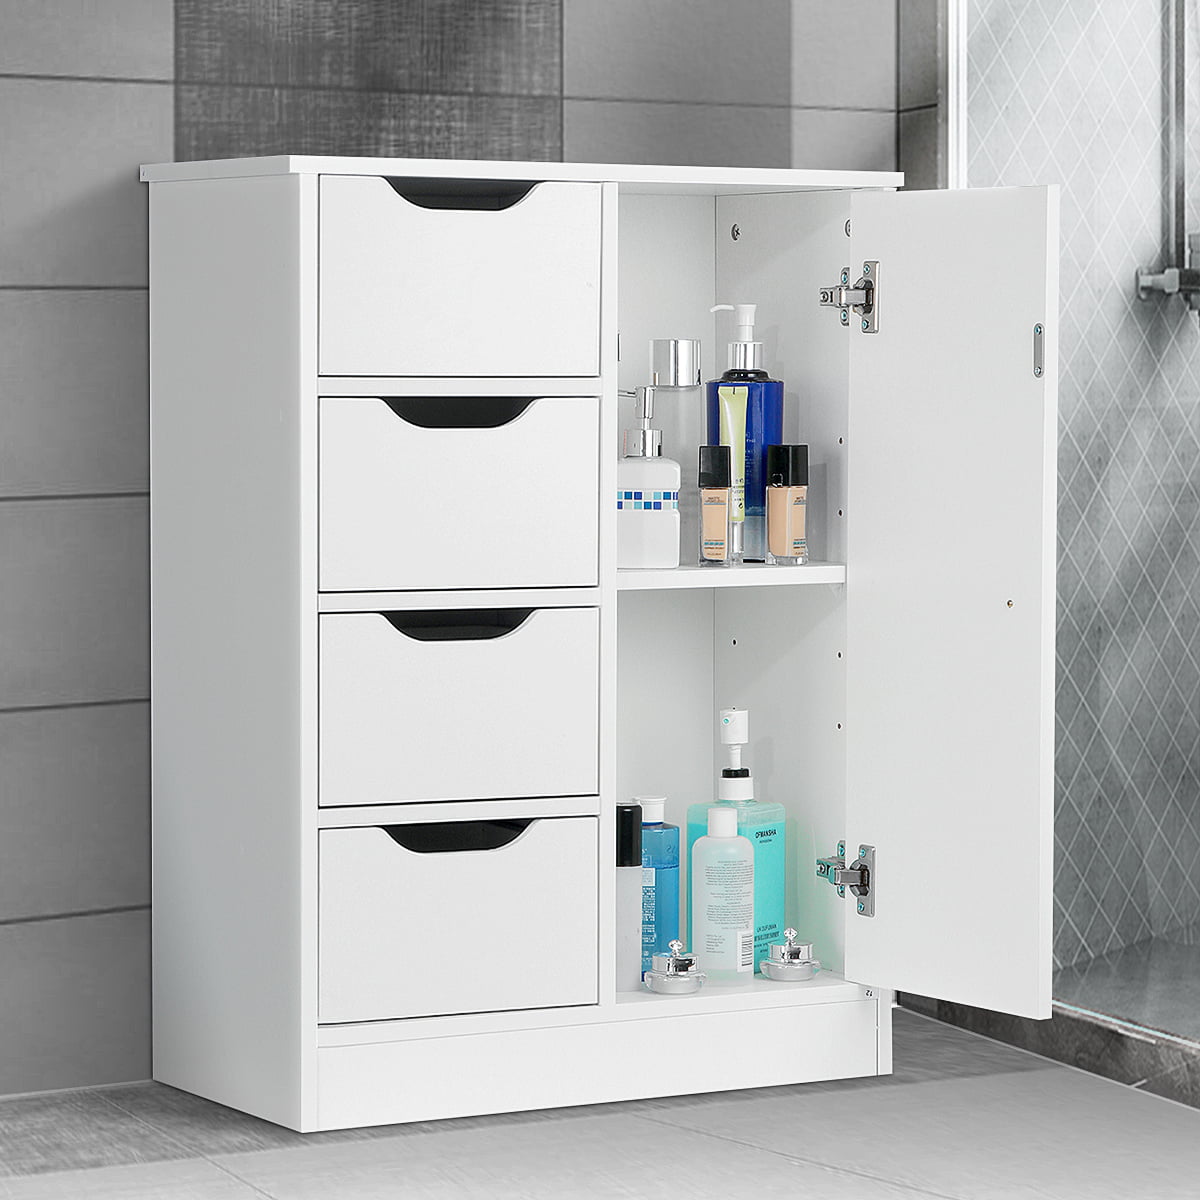 Details about   MDF Cupboard  Floor Cabinet Single Door Bathroom Storage Cabinet with 4 Drawers 